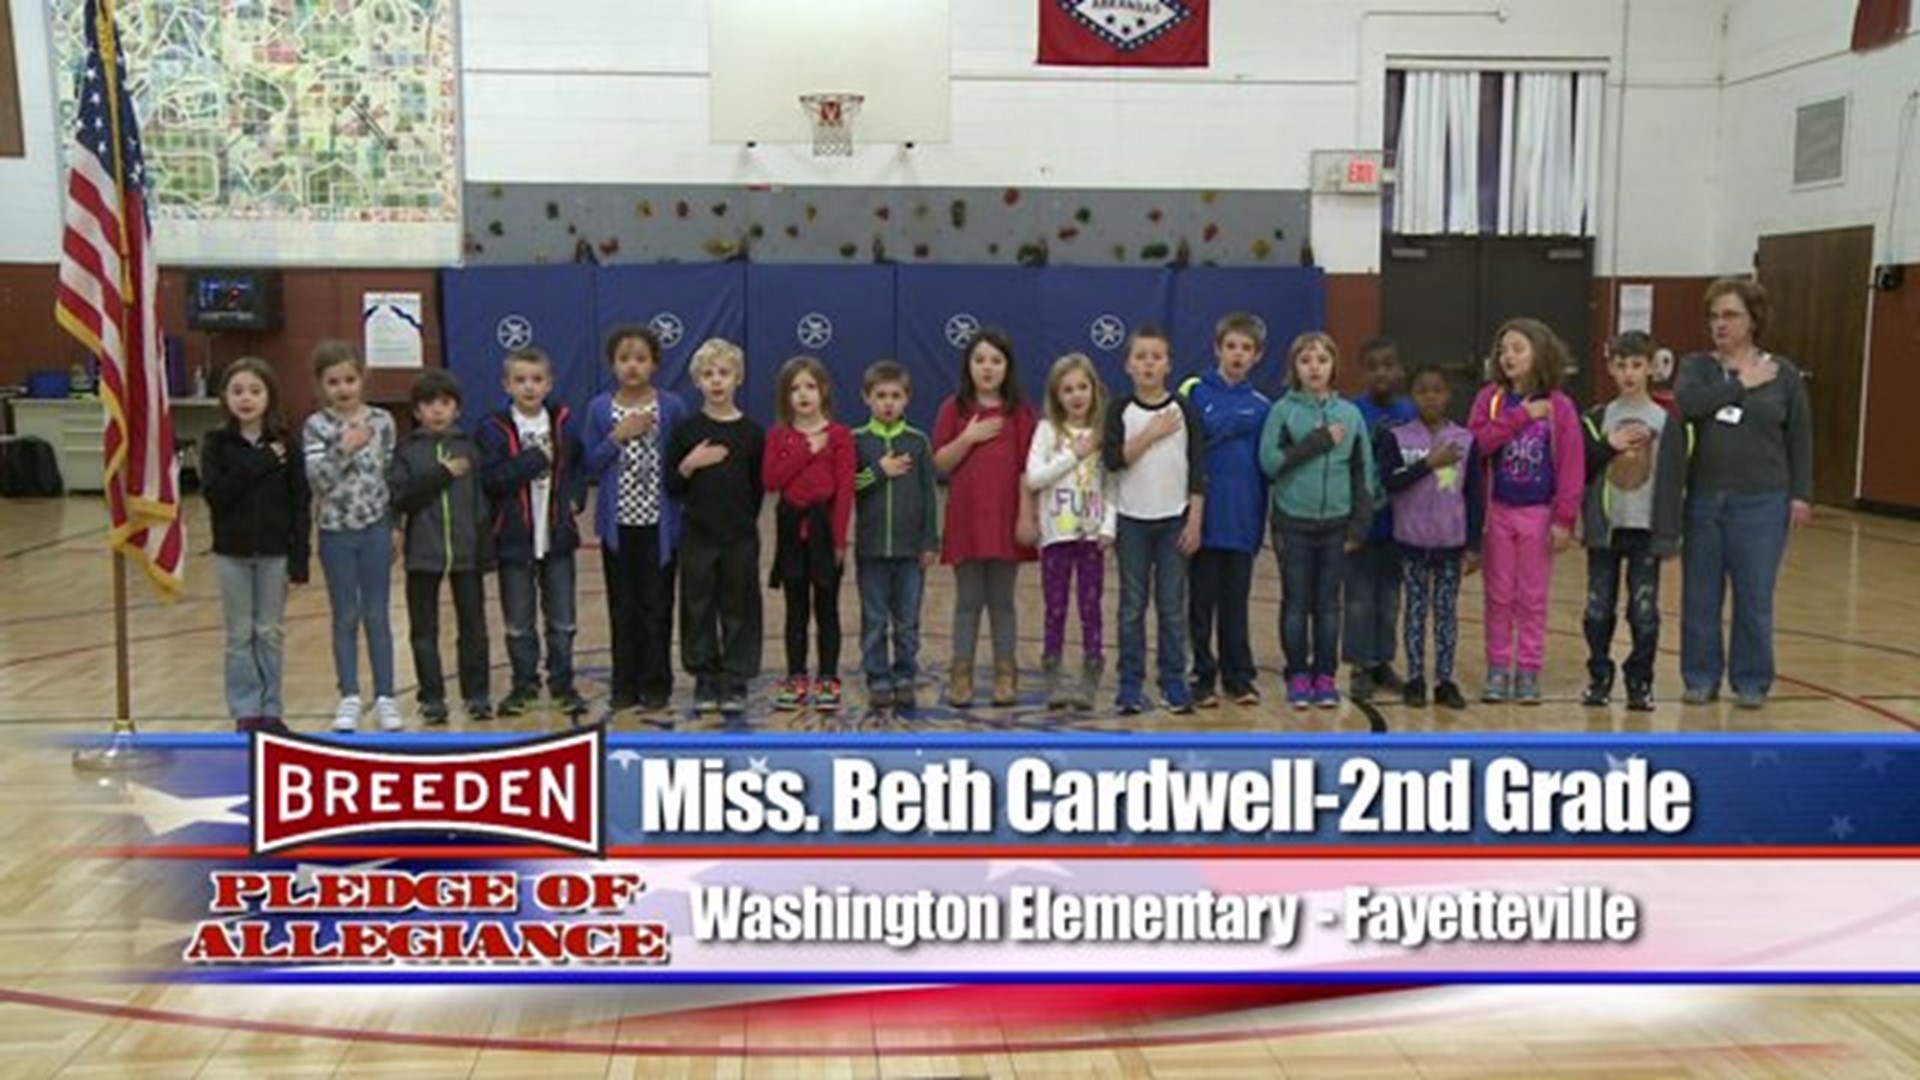 Washington Elementary - Fayetteville, Miss Cardwell - Second Grade